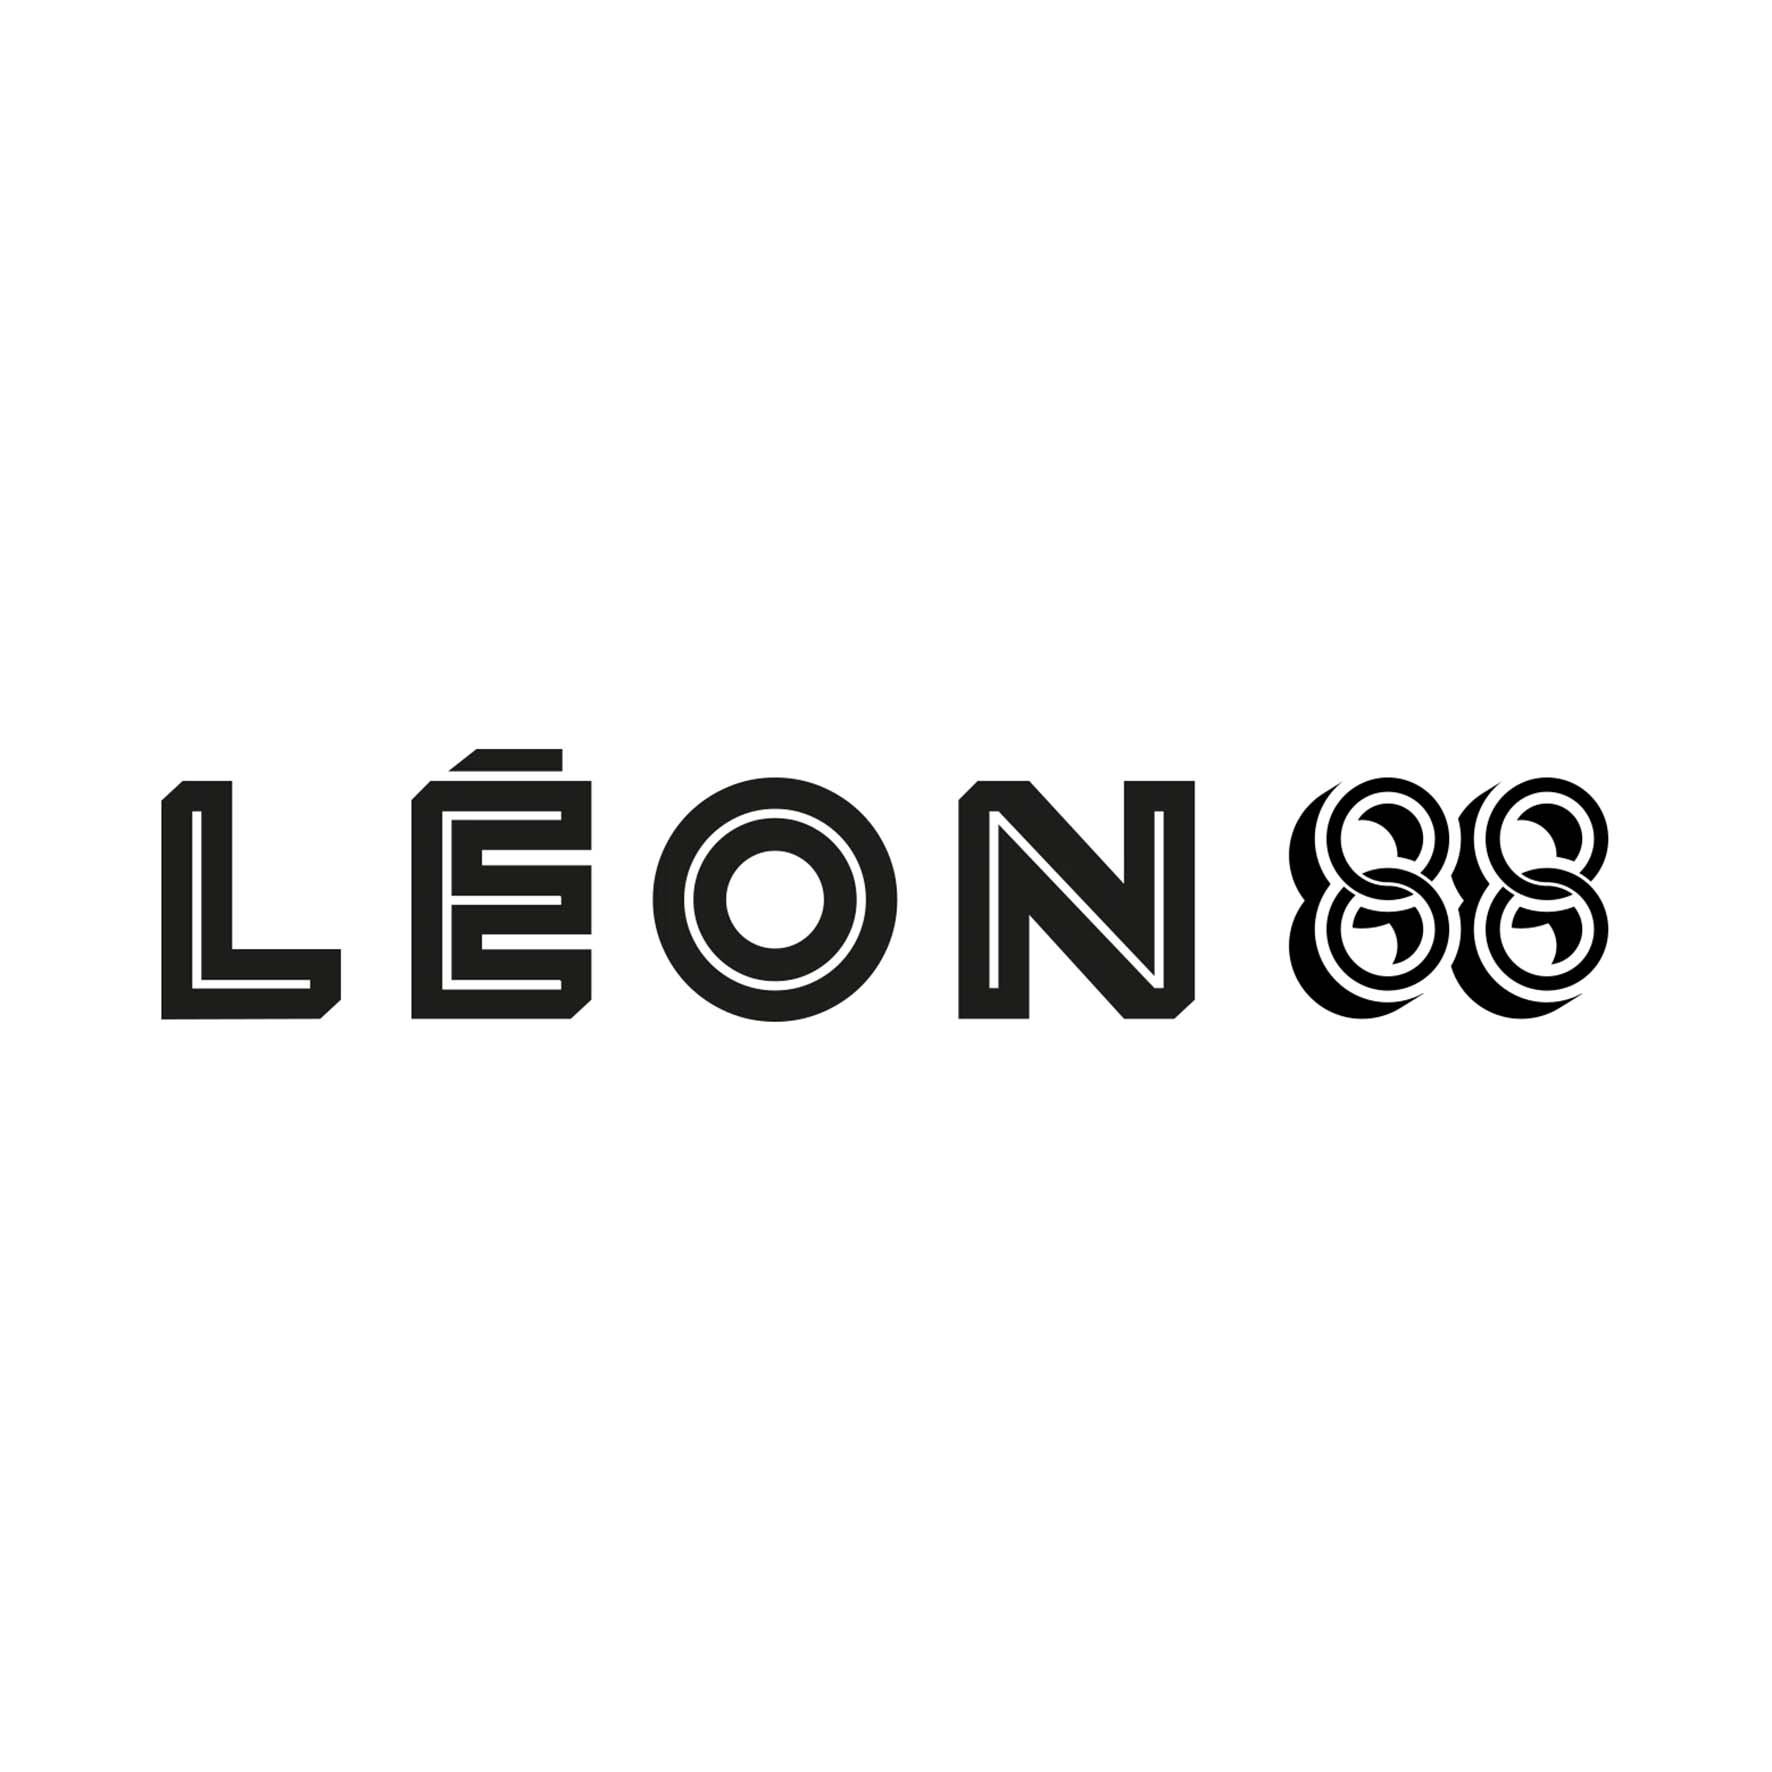 leon88.jpg